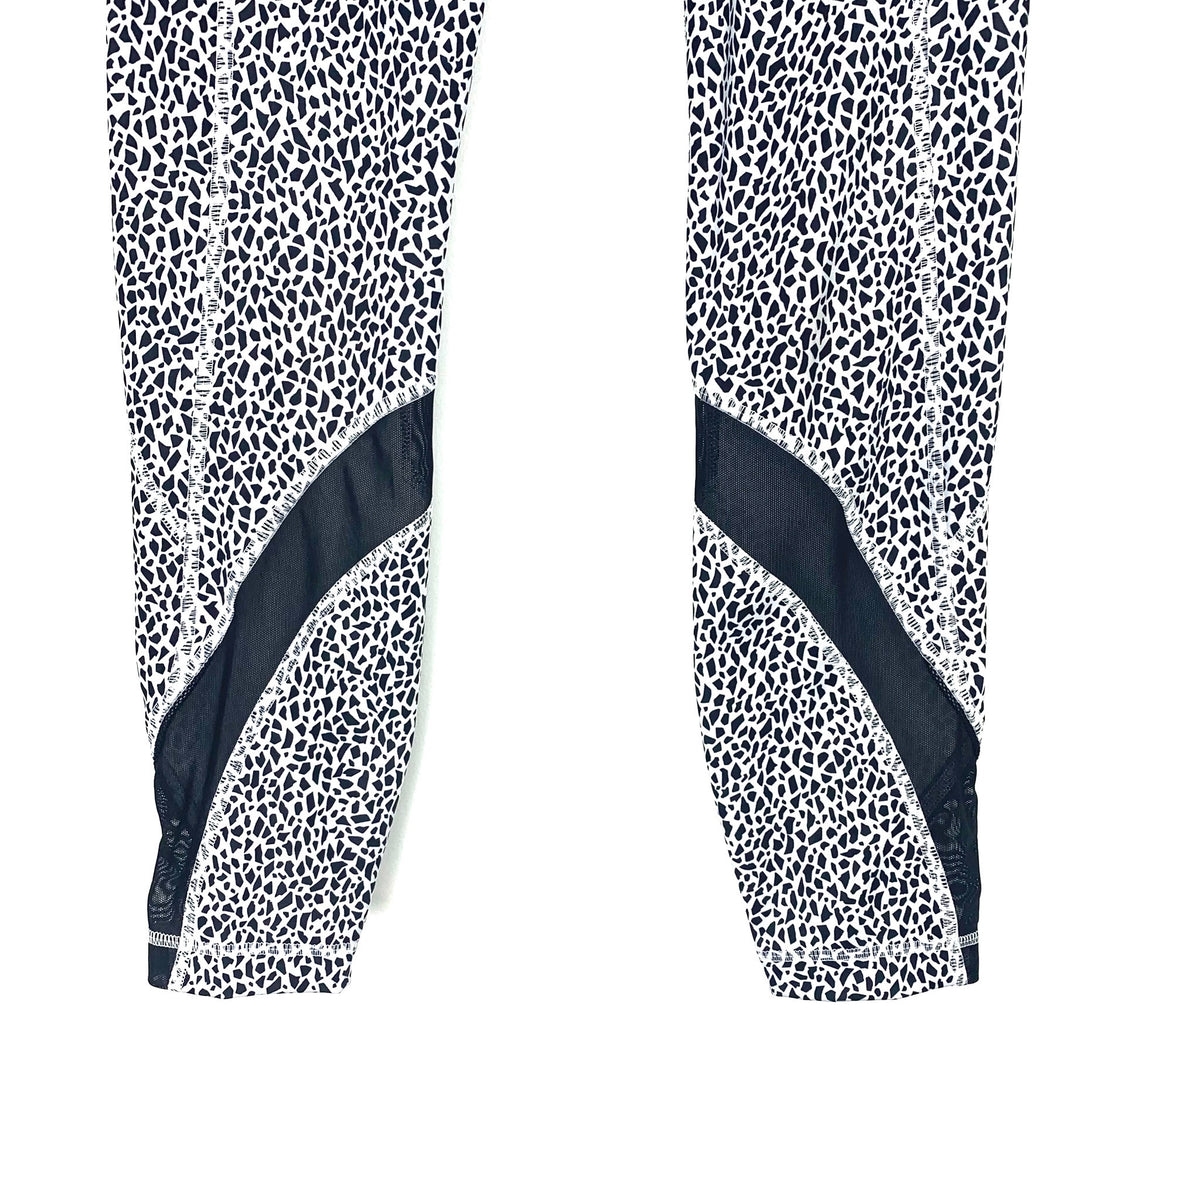 LULULEMON Hot! Animal Leopard White Black Geometric Leggings size 4 - 1722